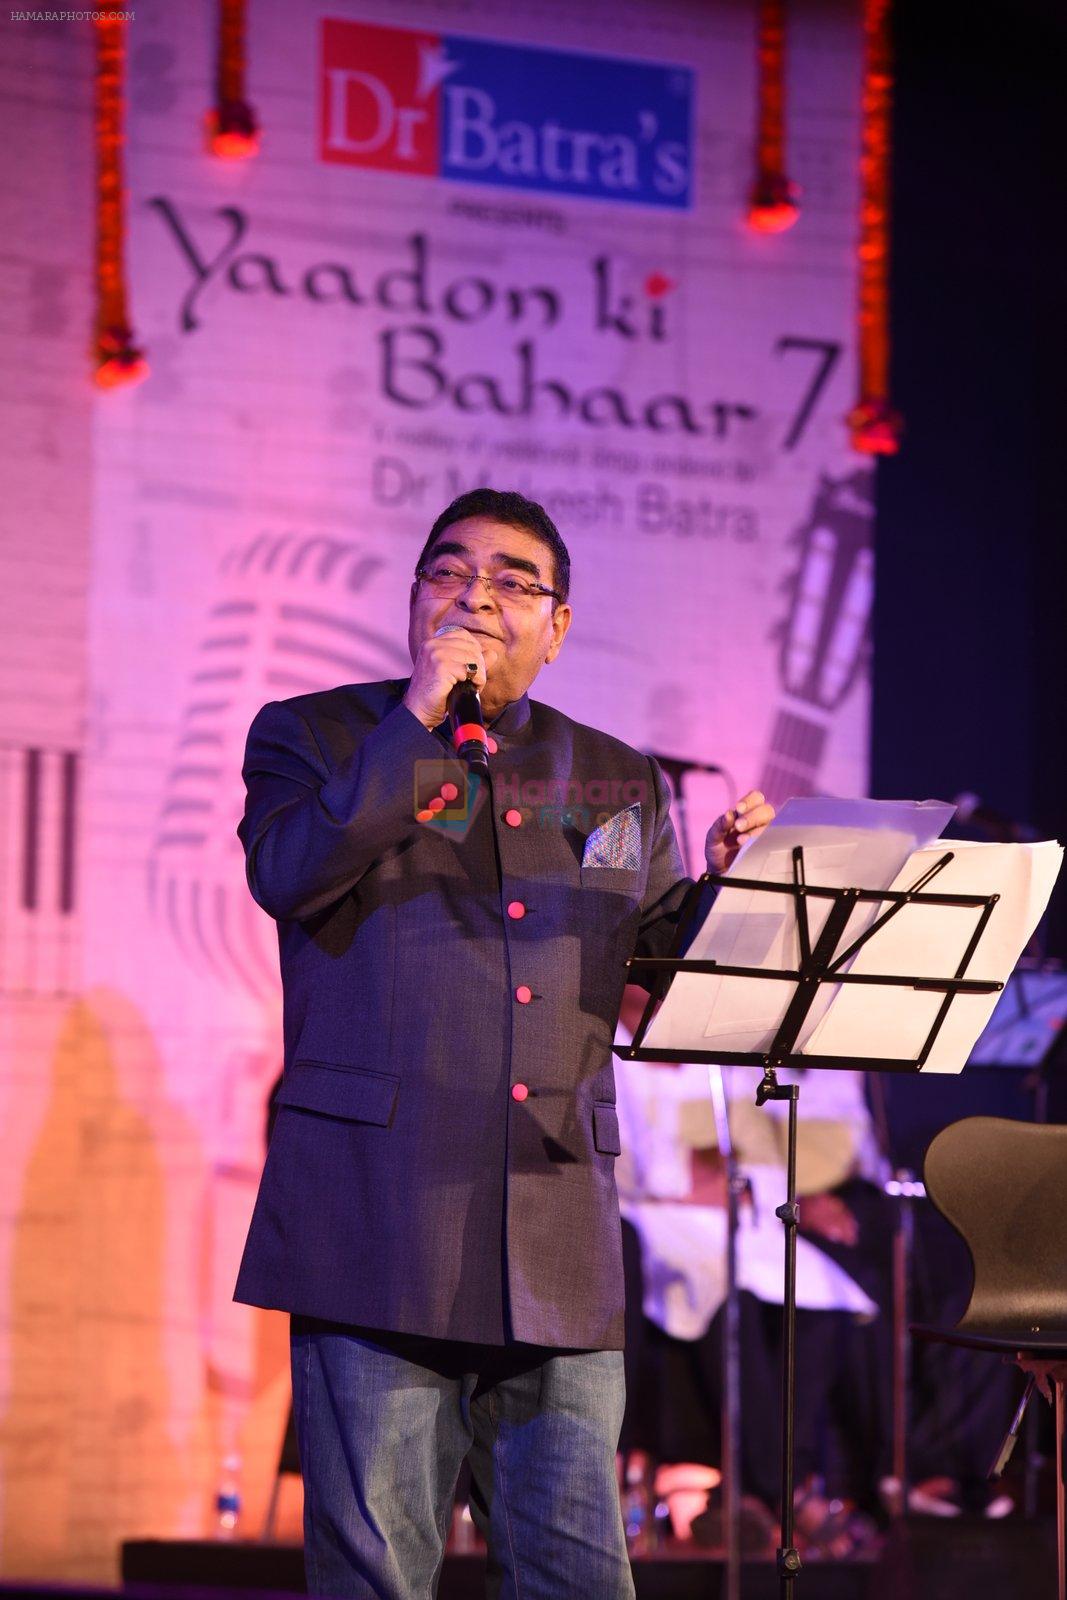 Mukesh Batra concert in Mumbai on 11th Jan 2017